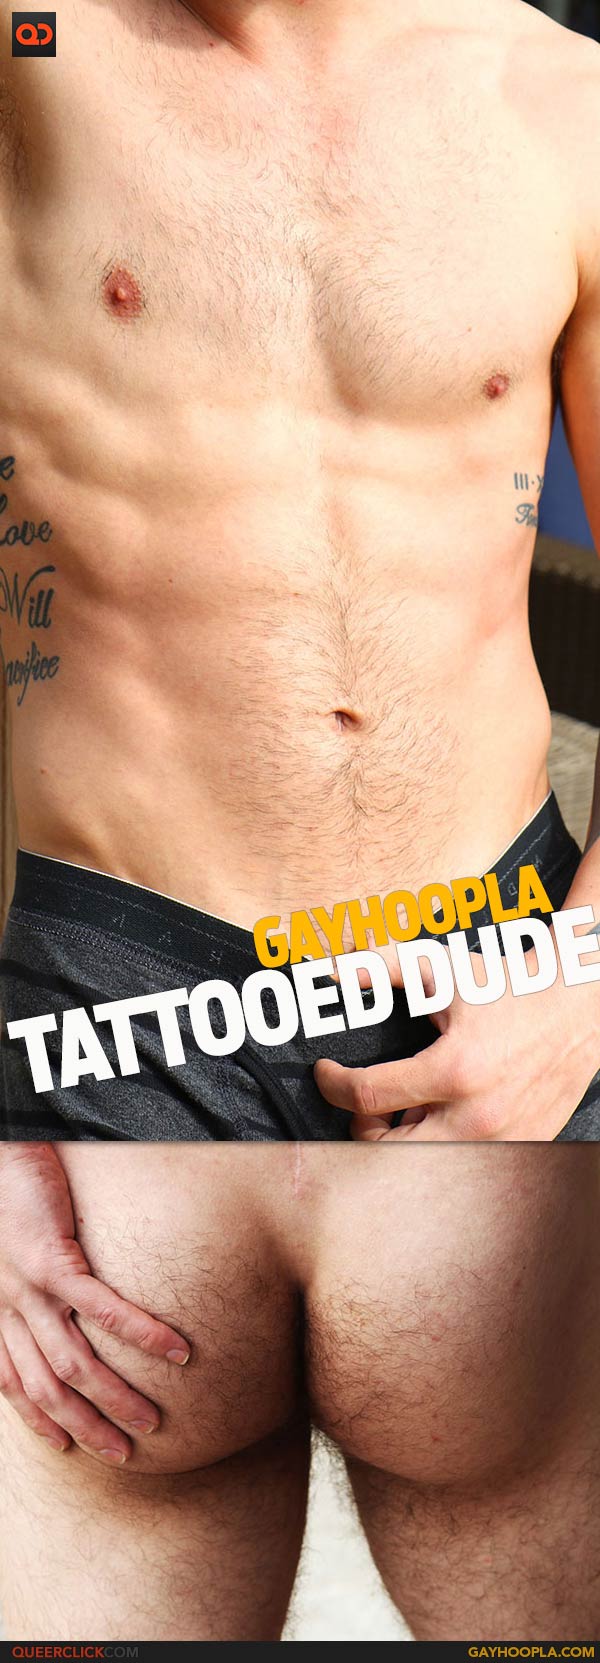 GayHoopla: Tattooed Dude 